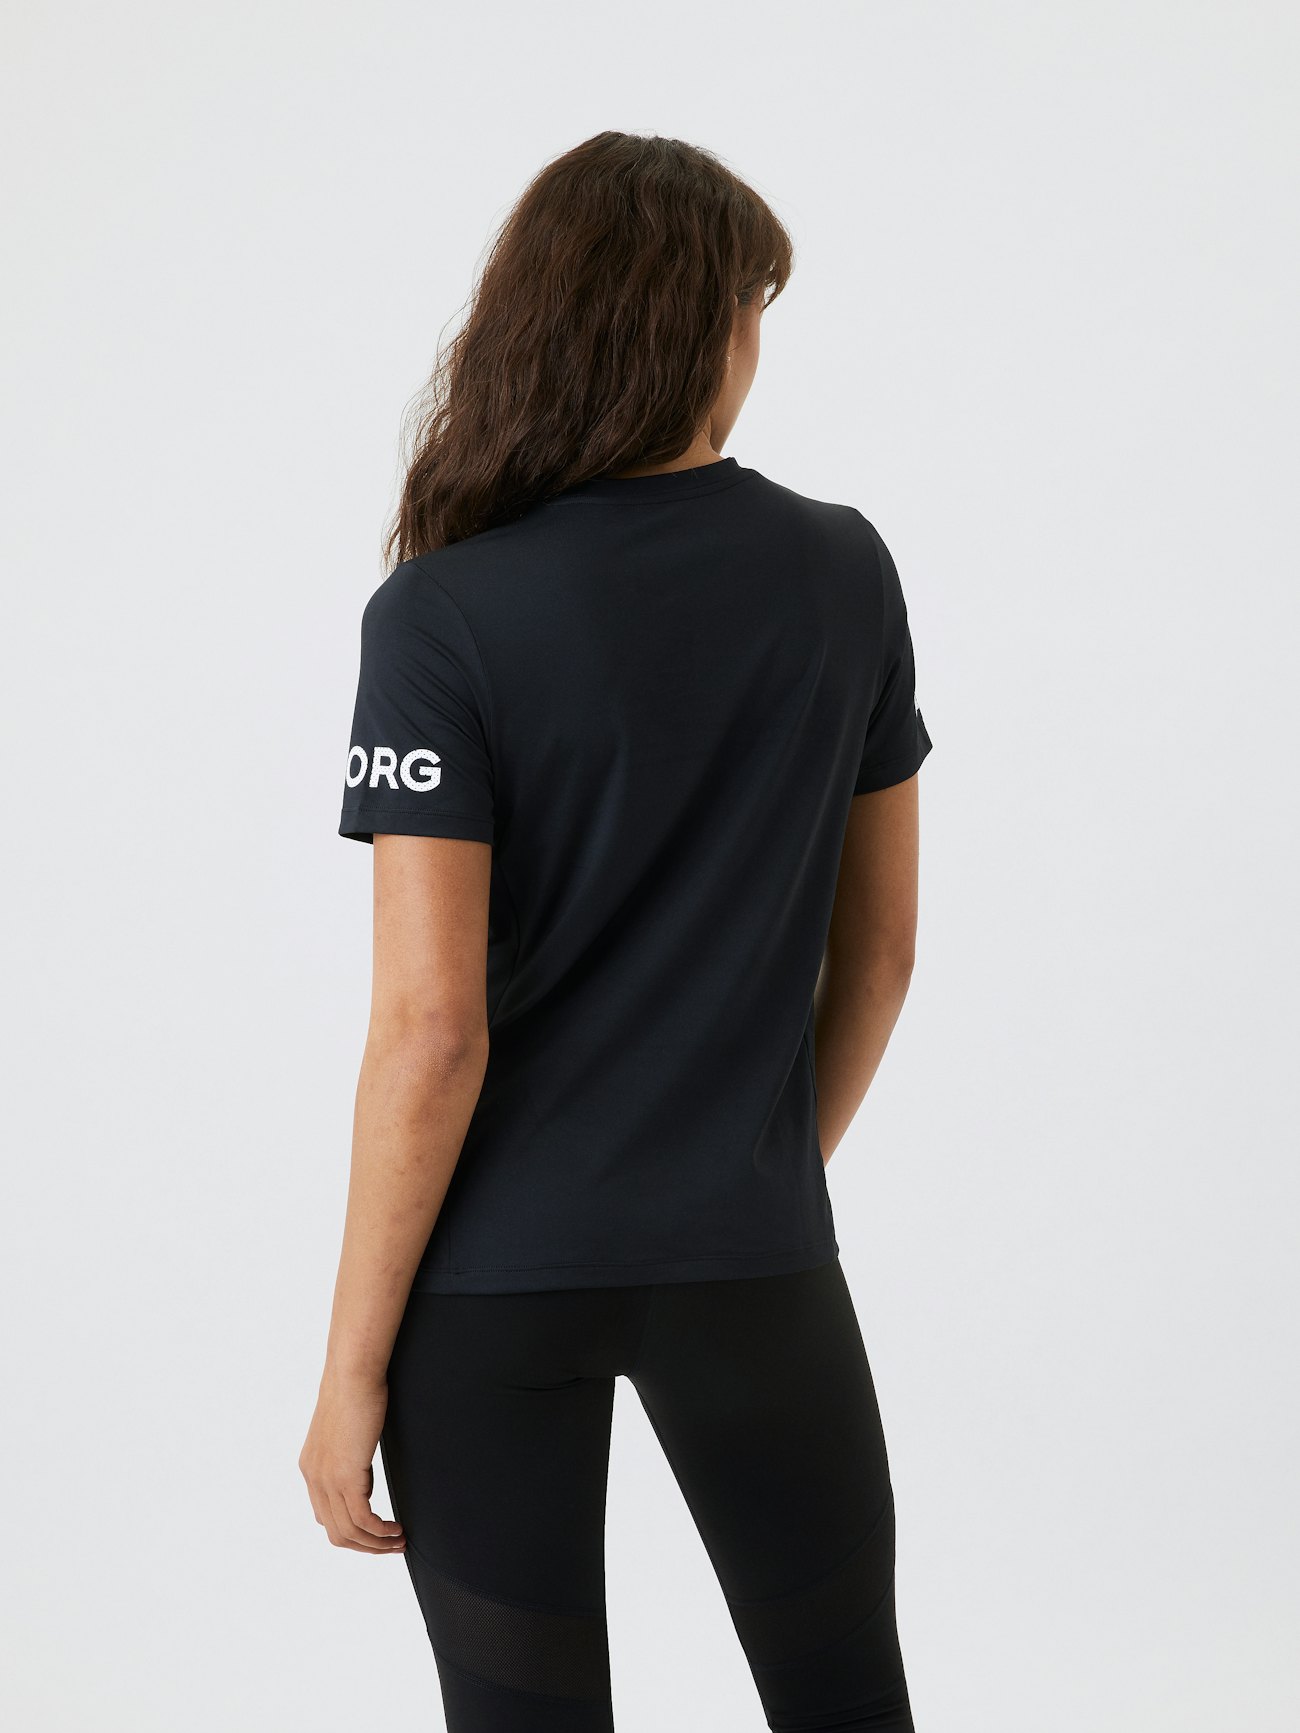 Borg T-Shirt - Black Beauty